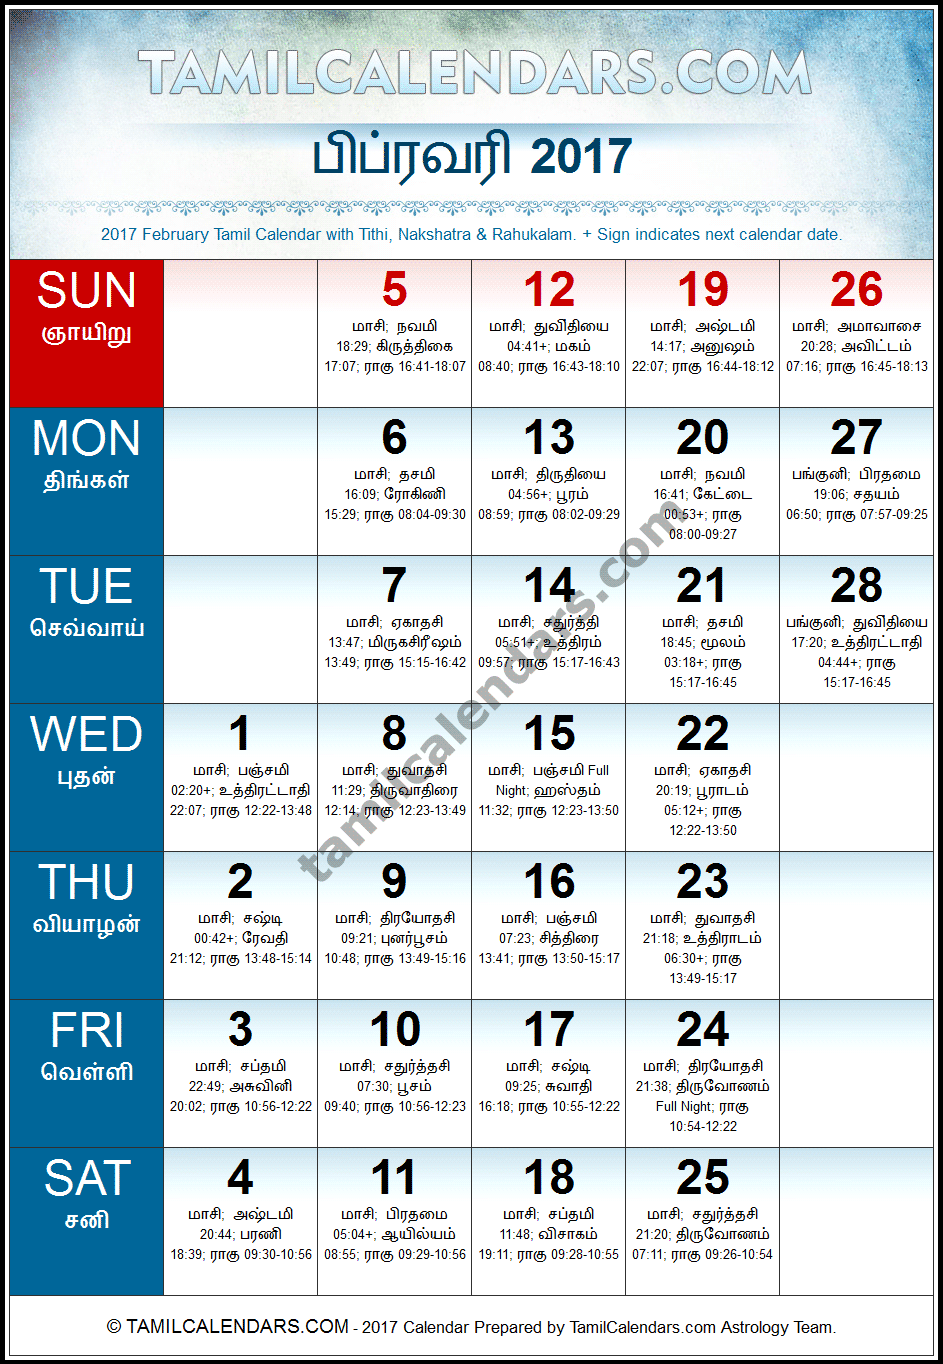 February 2017 Tamil Calendar